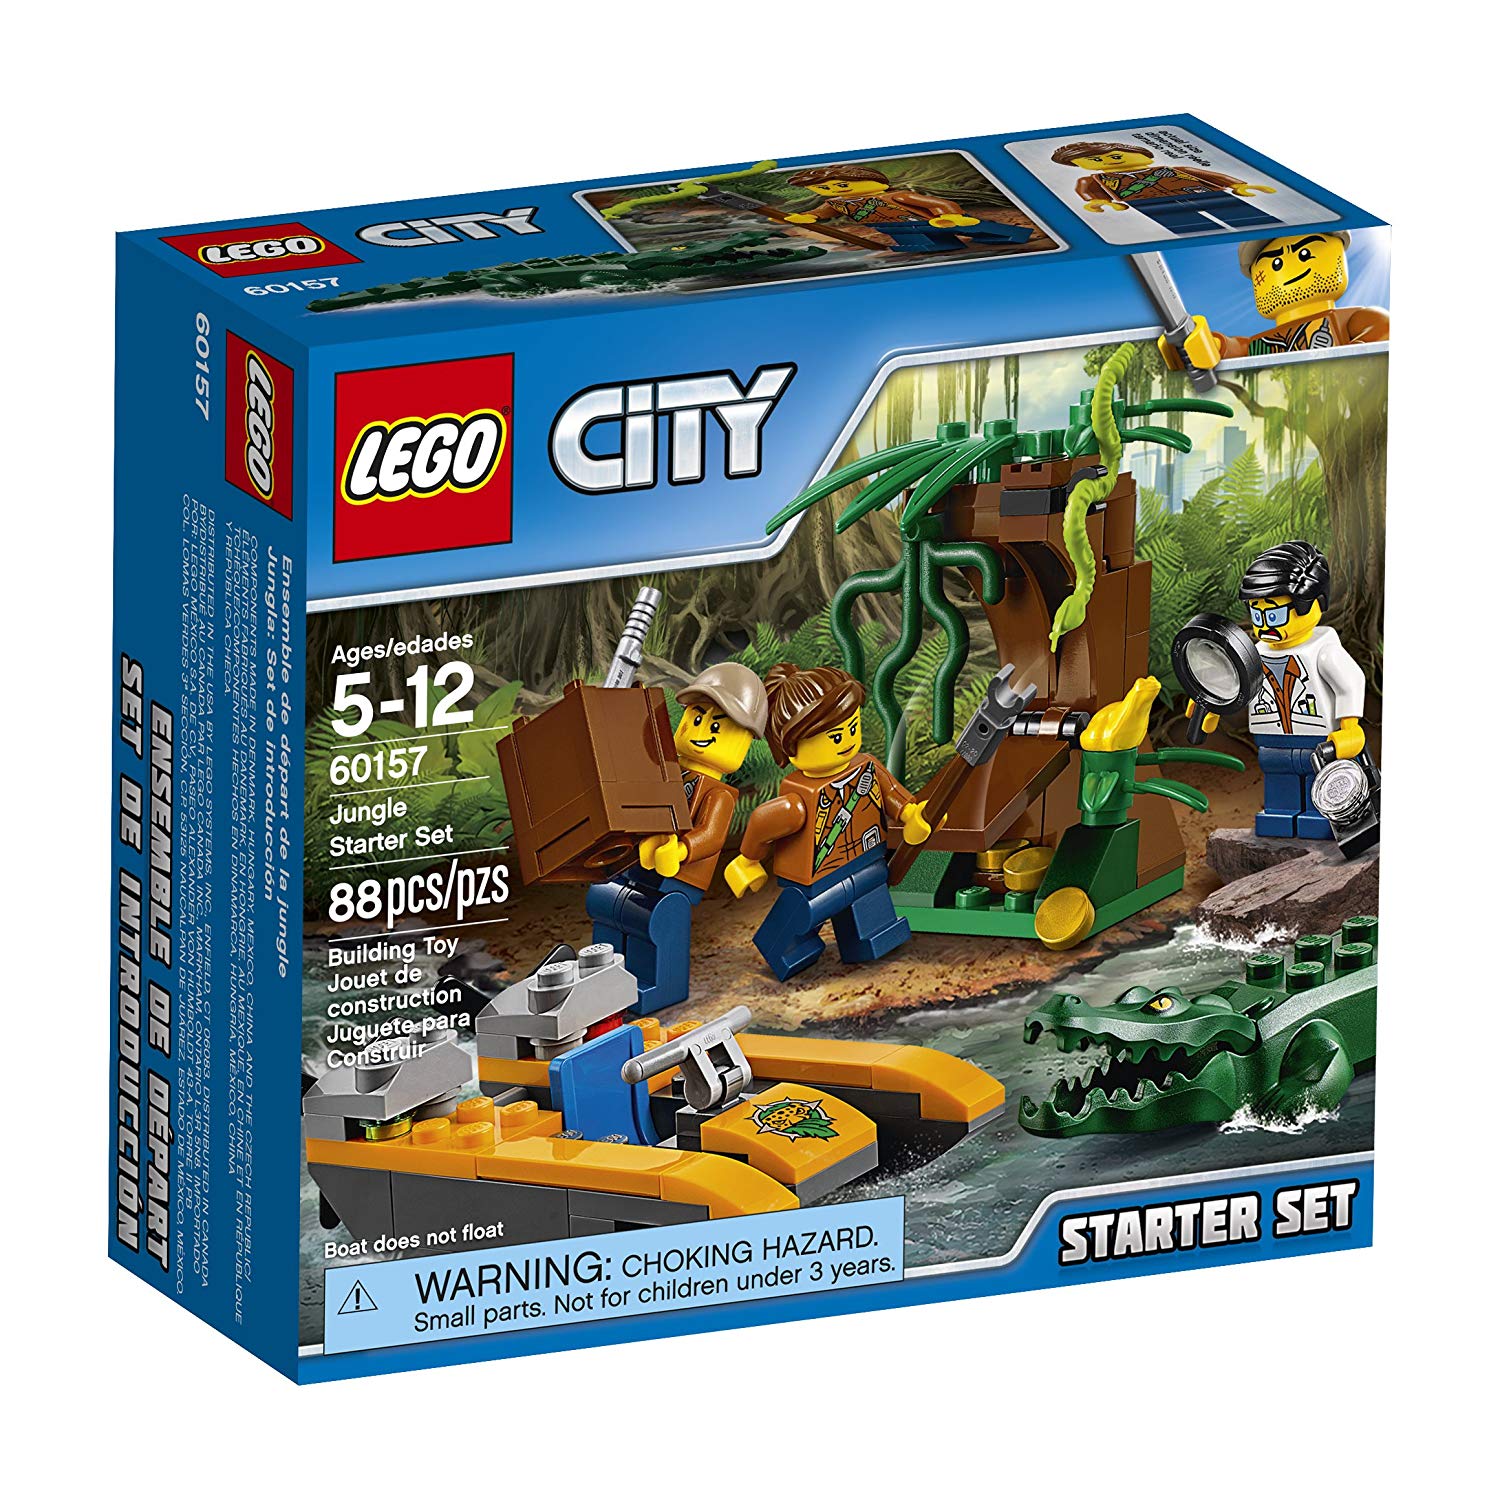 Lego City Jungle Starter Set 60157 Building Kit (88 Pieces)